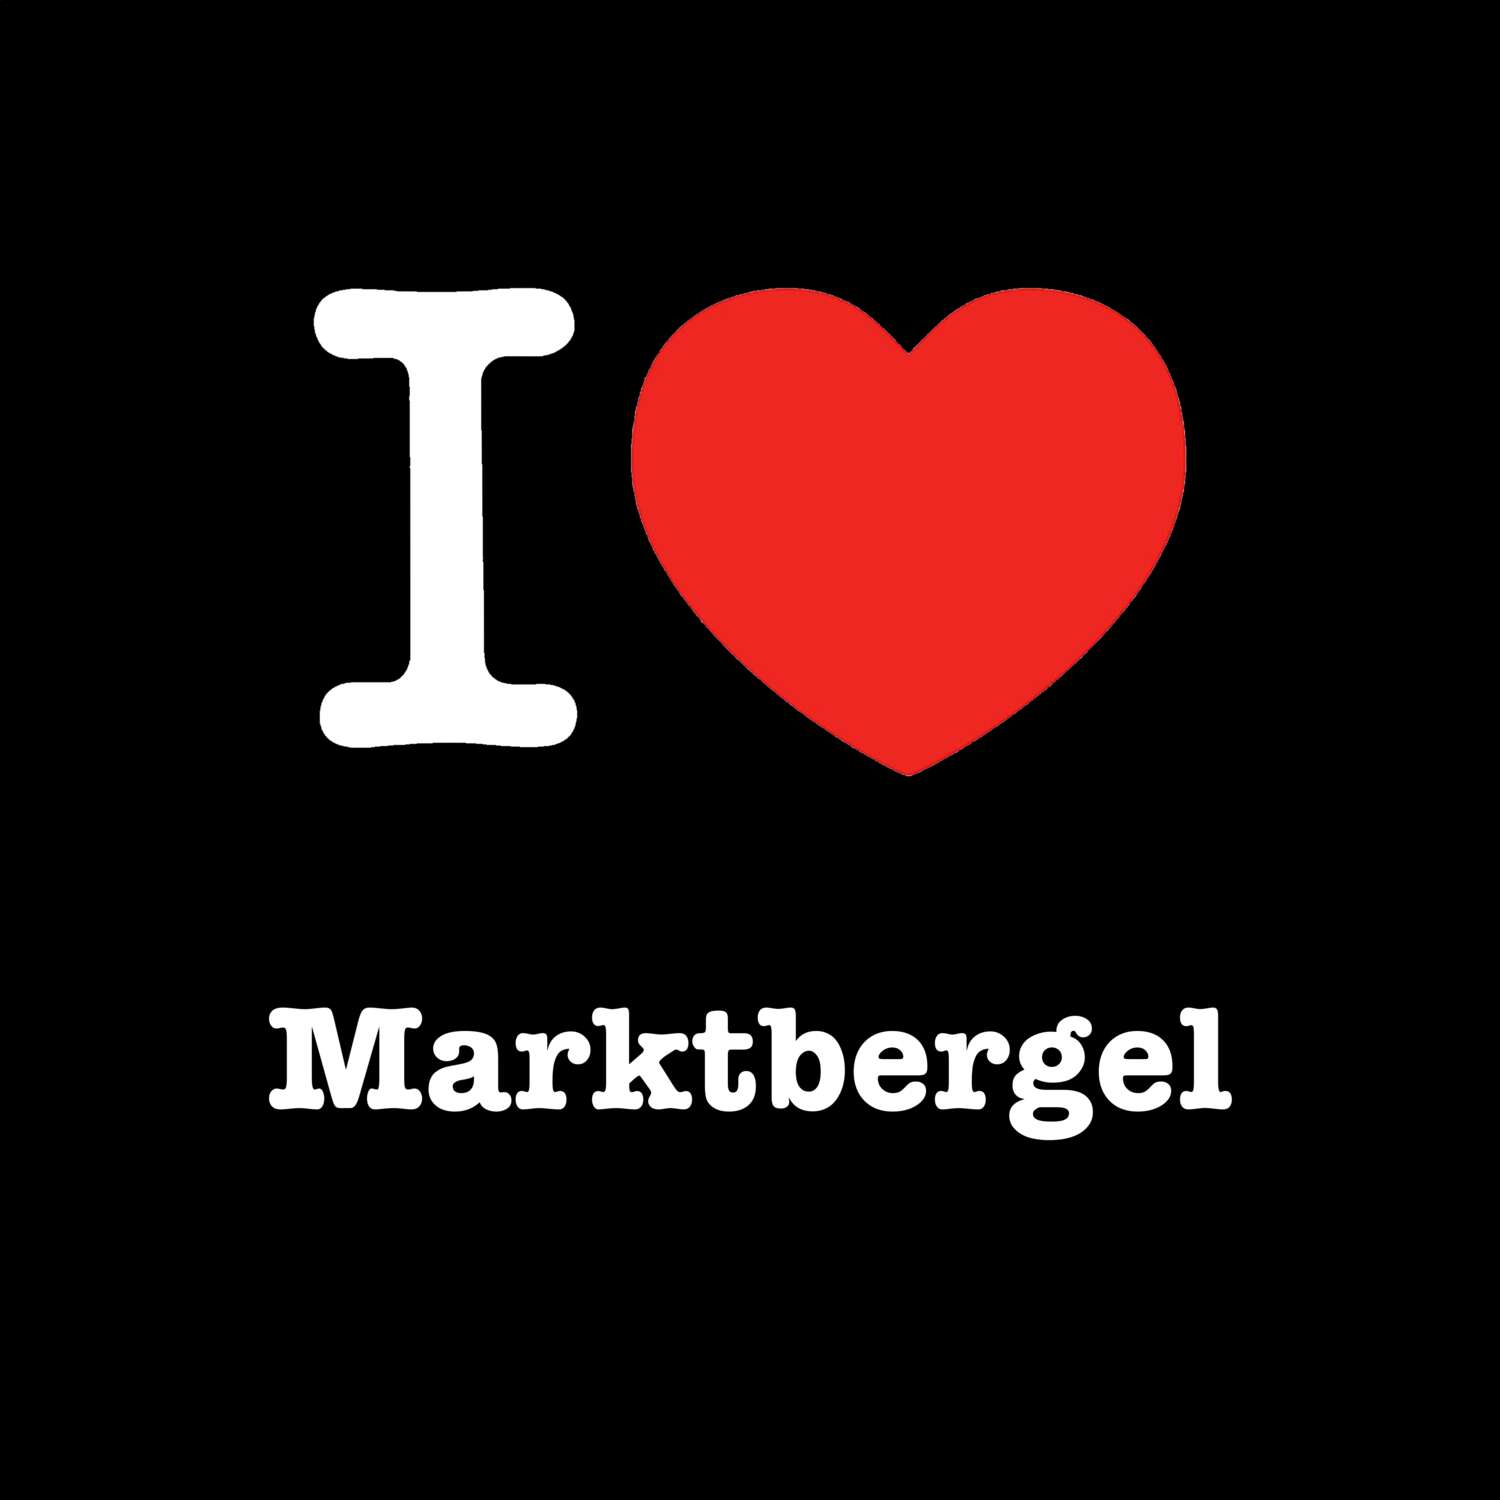 Marktbergel T-Shirt »I love«